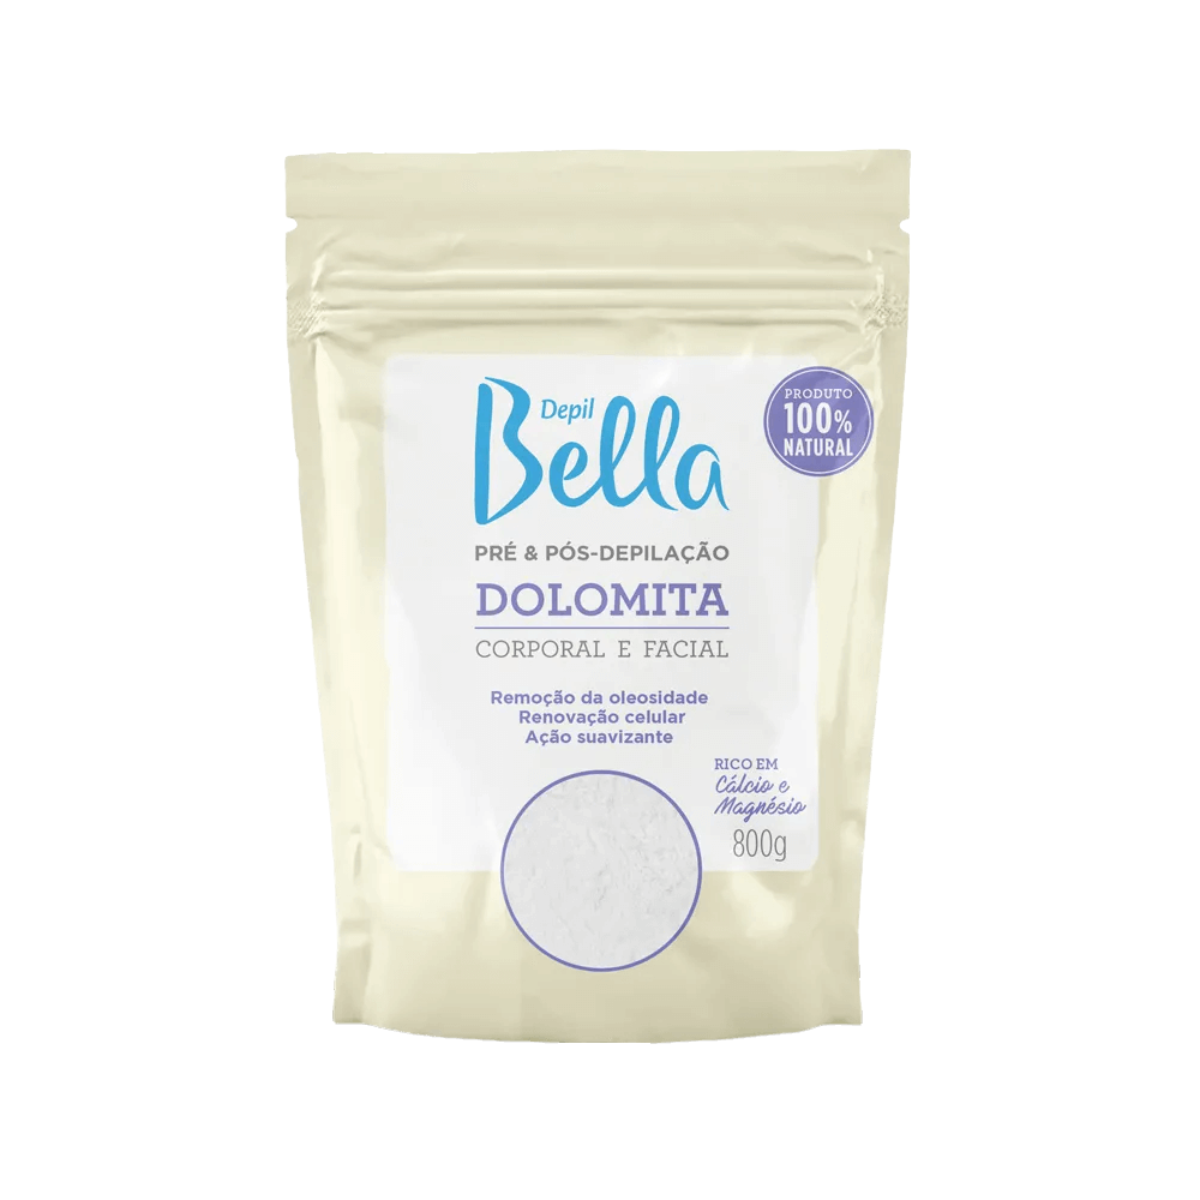 Depil Bella dolomita powder for effective waxing